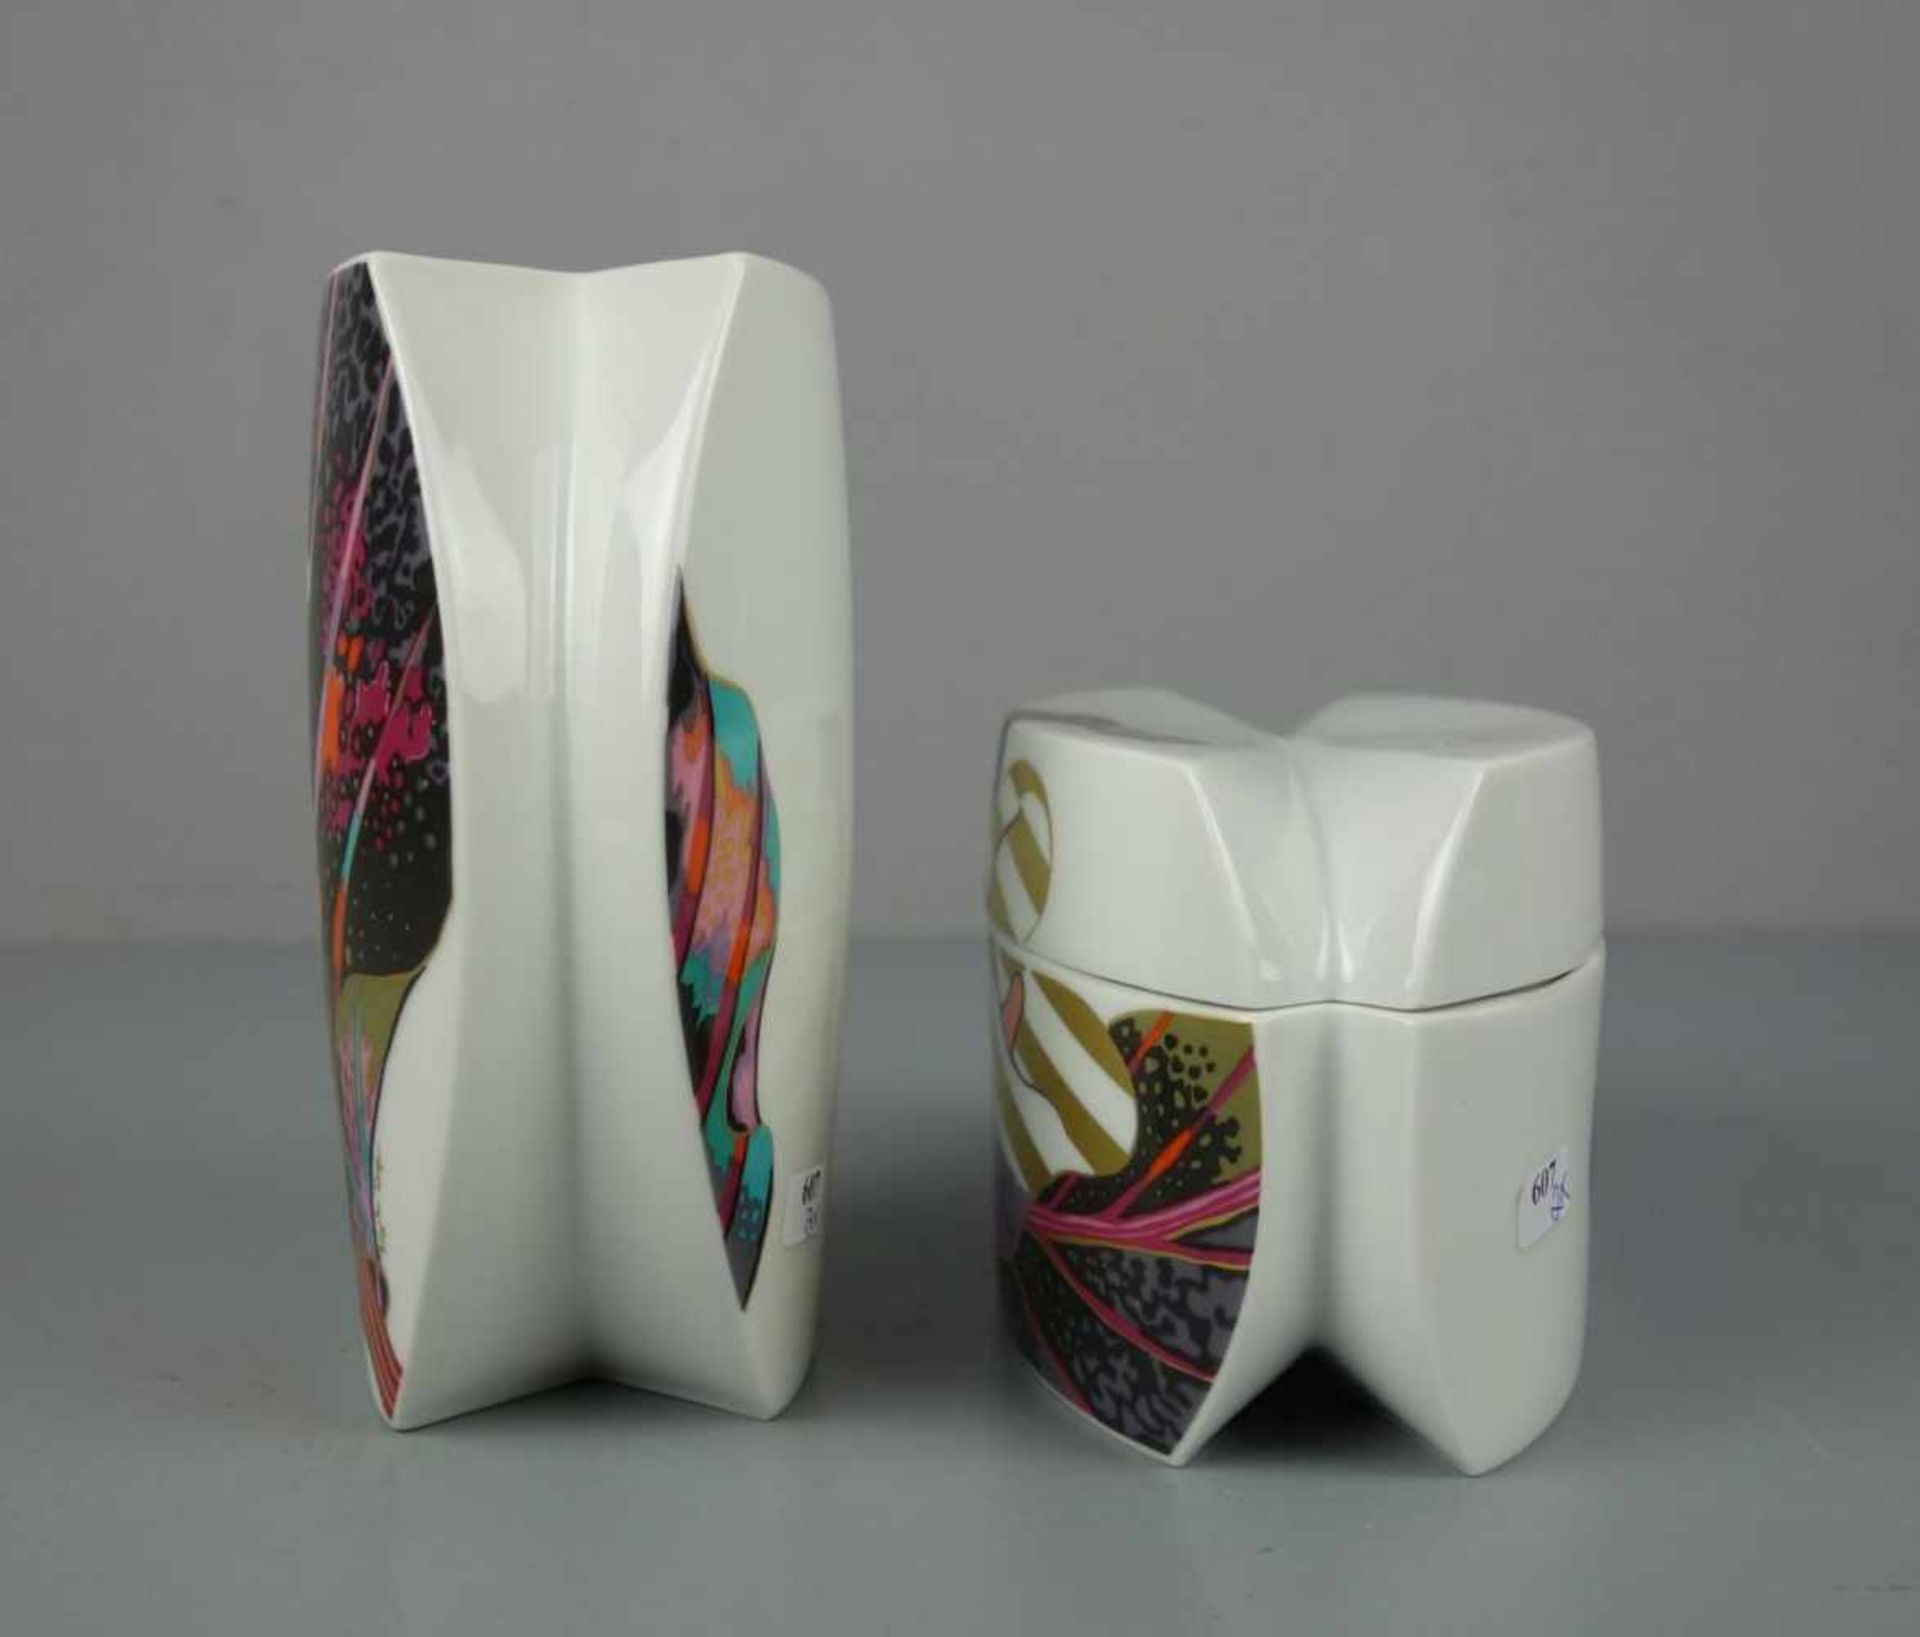 VASE UND DECKELDOSE / vase and box, Porzellan, Manufaktur Rosenthal, 1980er Jahre, Entwurf Jan van - Image 3 of 5